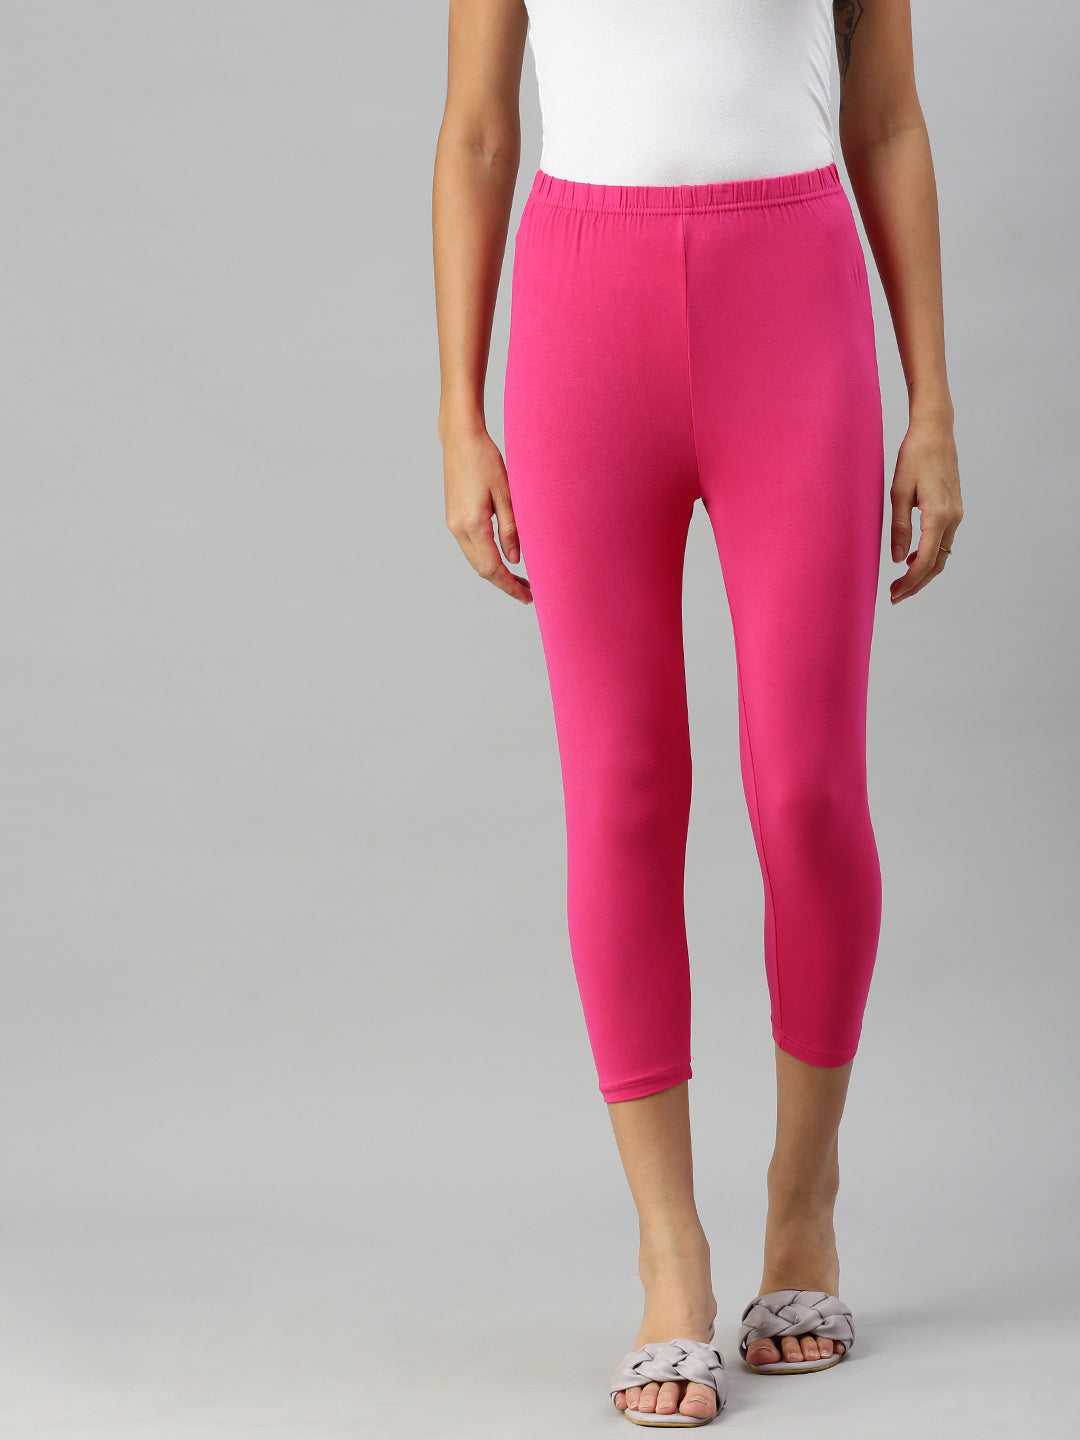 Shop Prisma Rani Pink Capri Leggings Today!